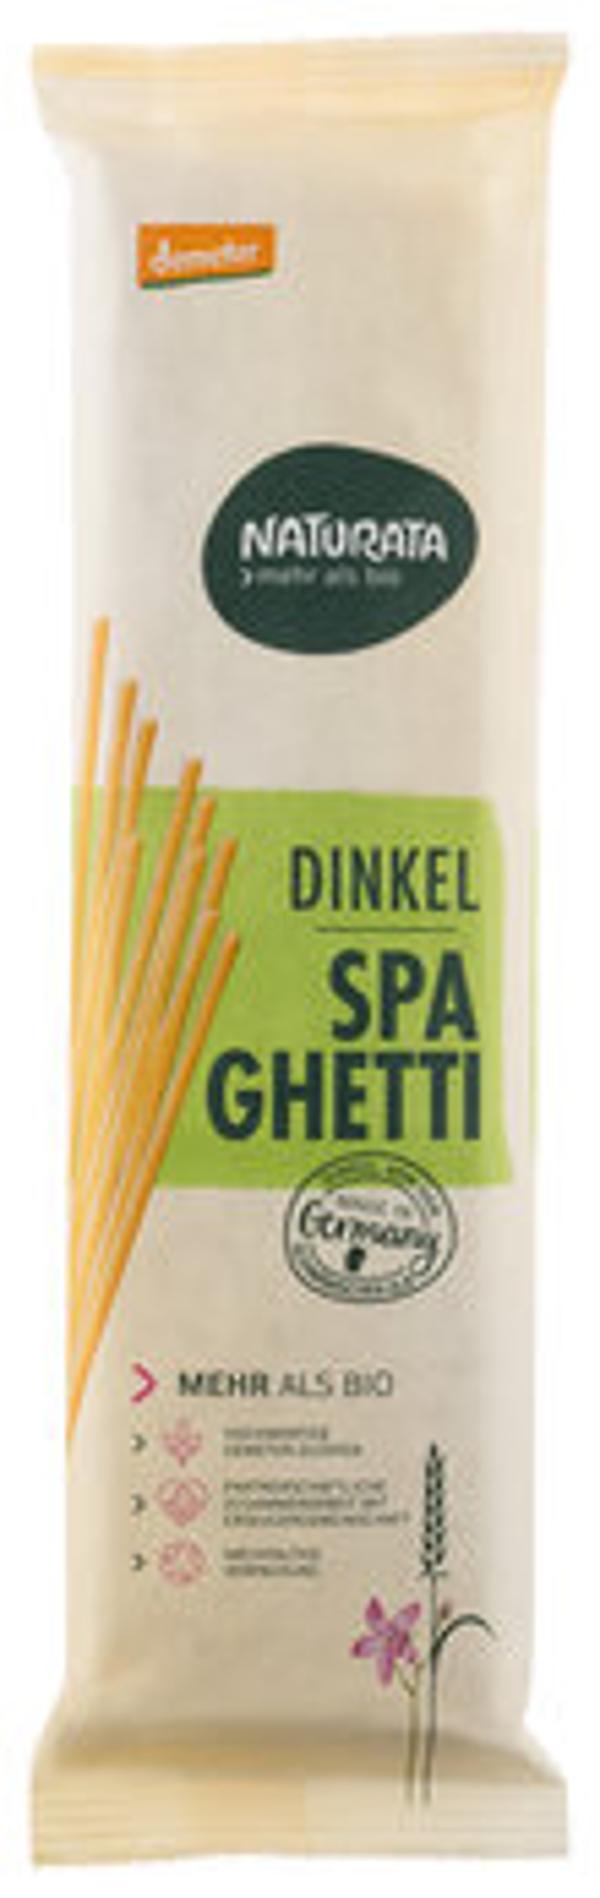 Produktfoto zu Dinkel-Spaghetti hell 500g